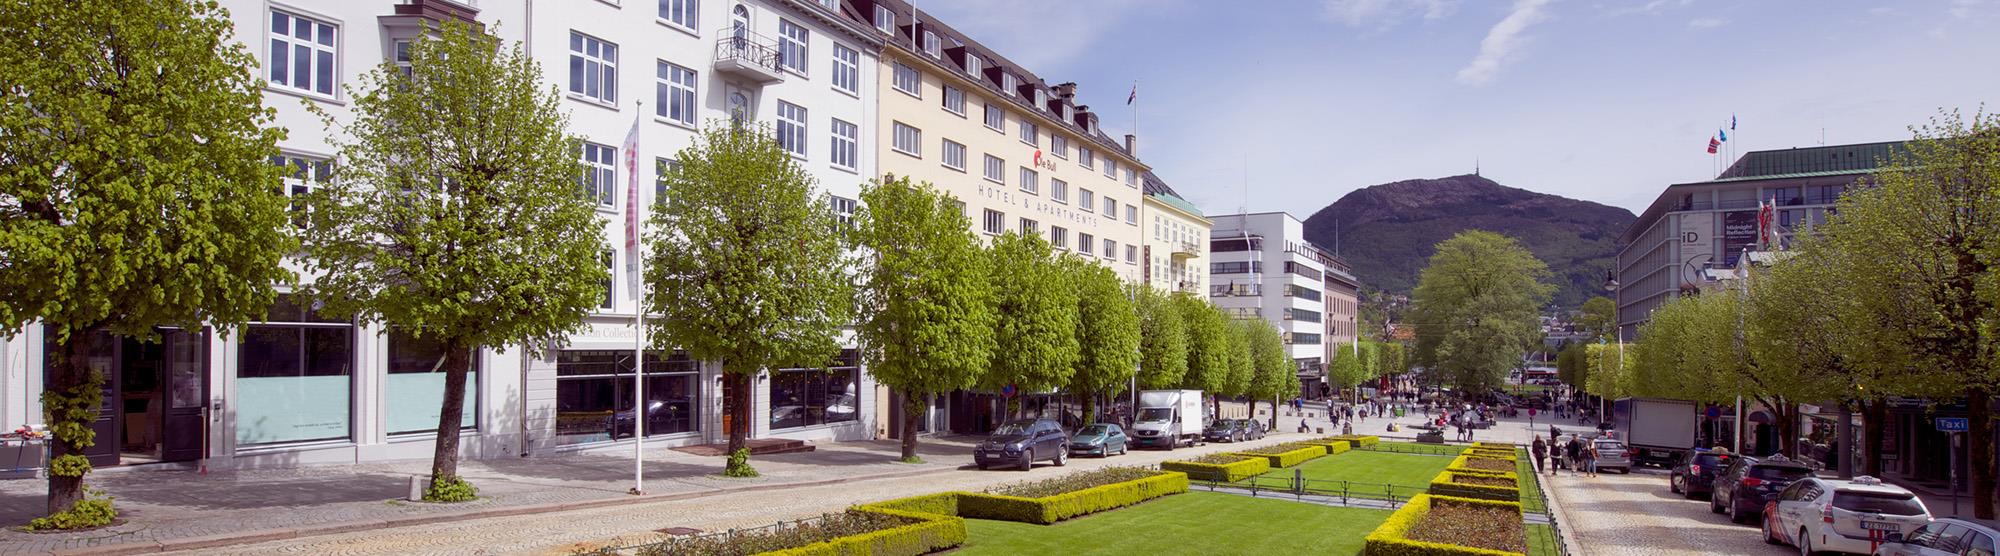 Hotels in Bergen City Centre - visitBergen.com